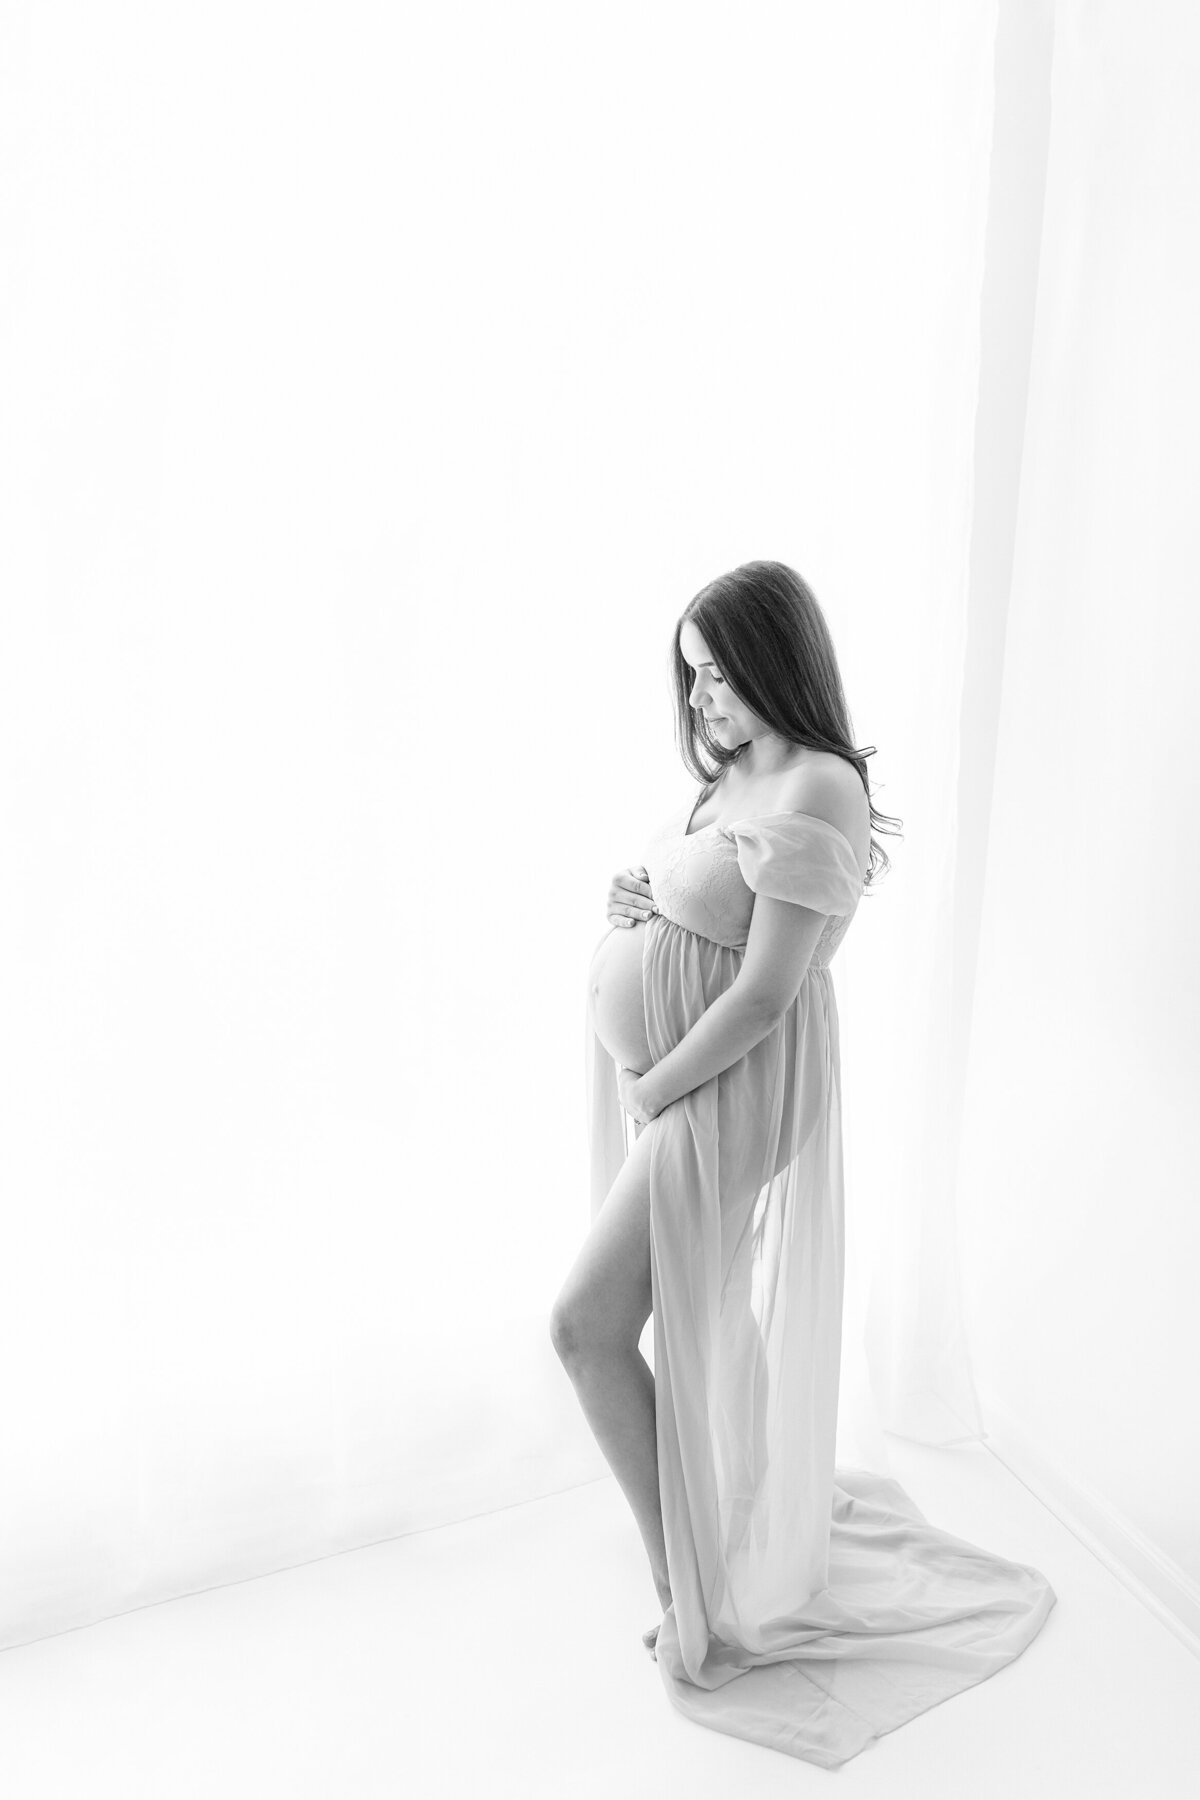 jacksonville-maternity-photographer-21